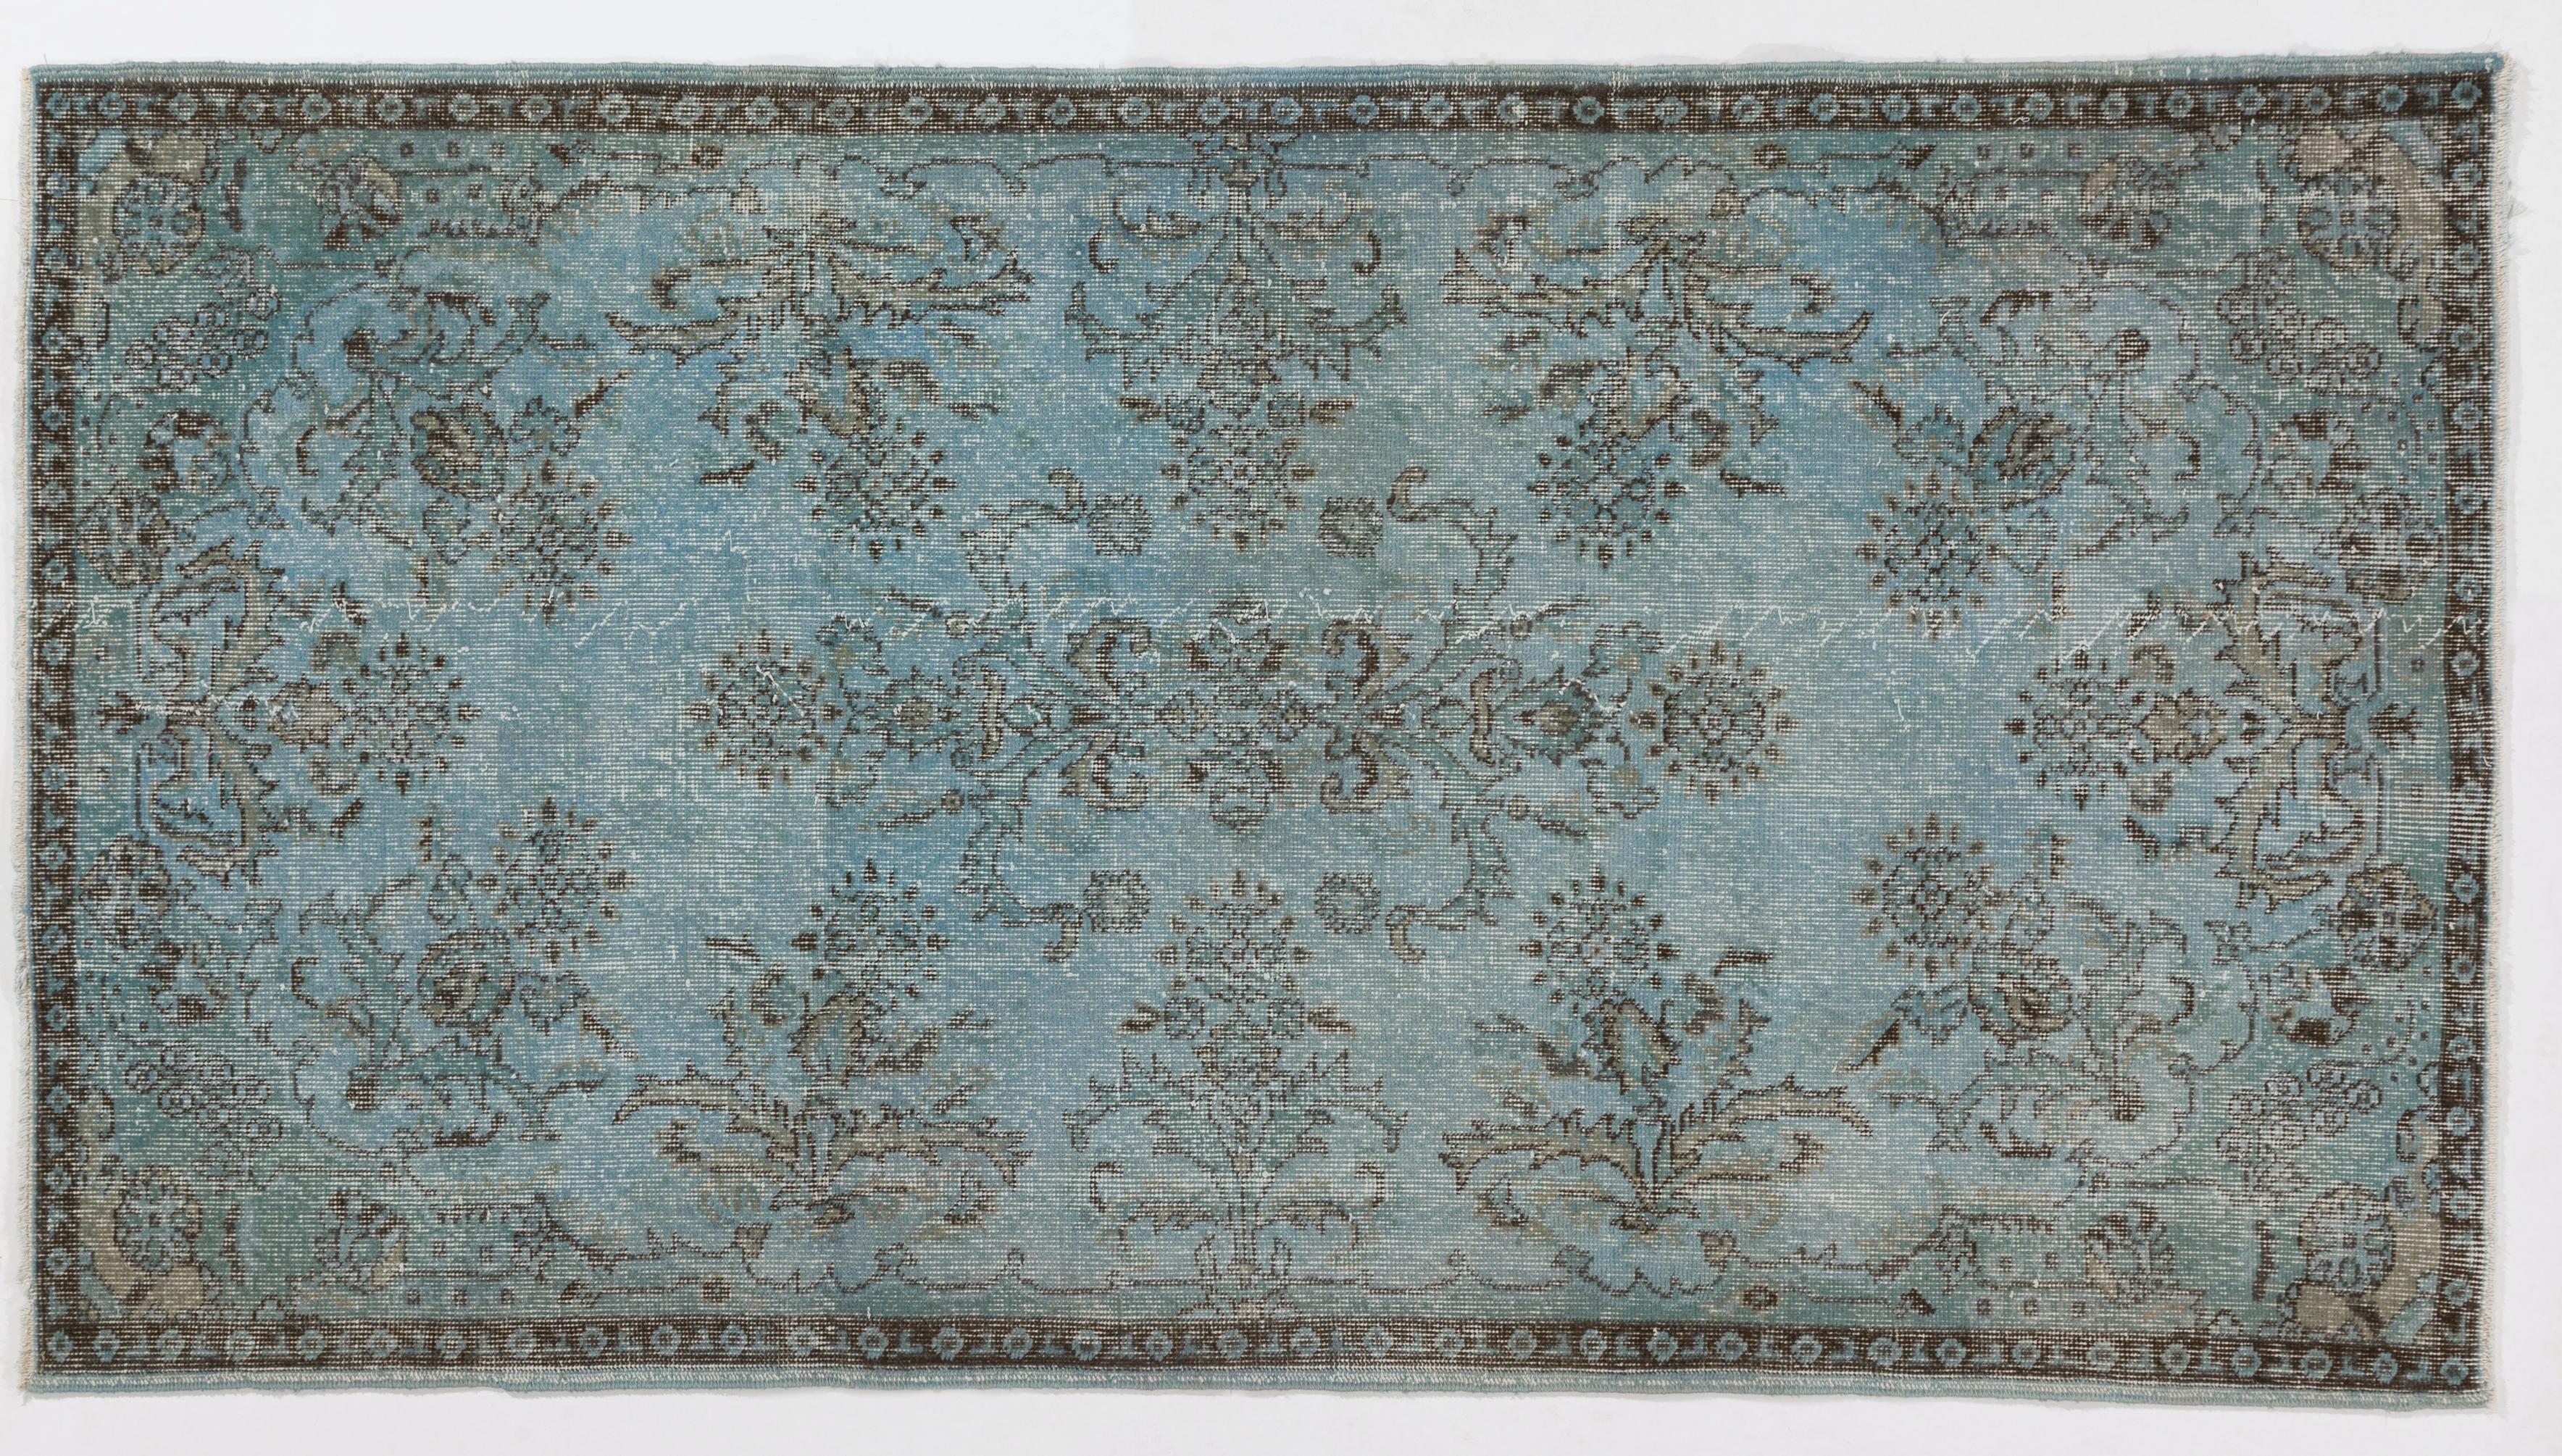 Hand-Woven 4x7.3 Ft Sky Blue Color Over-Dyed Vintage Rug, French Garden Design Carpet